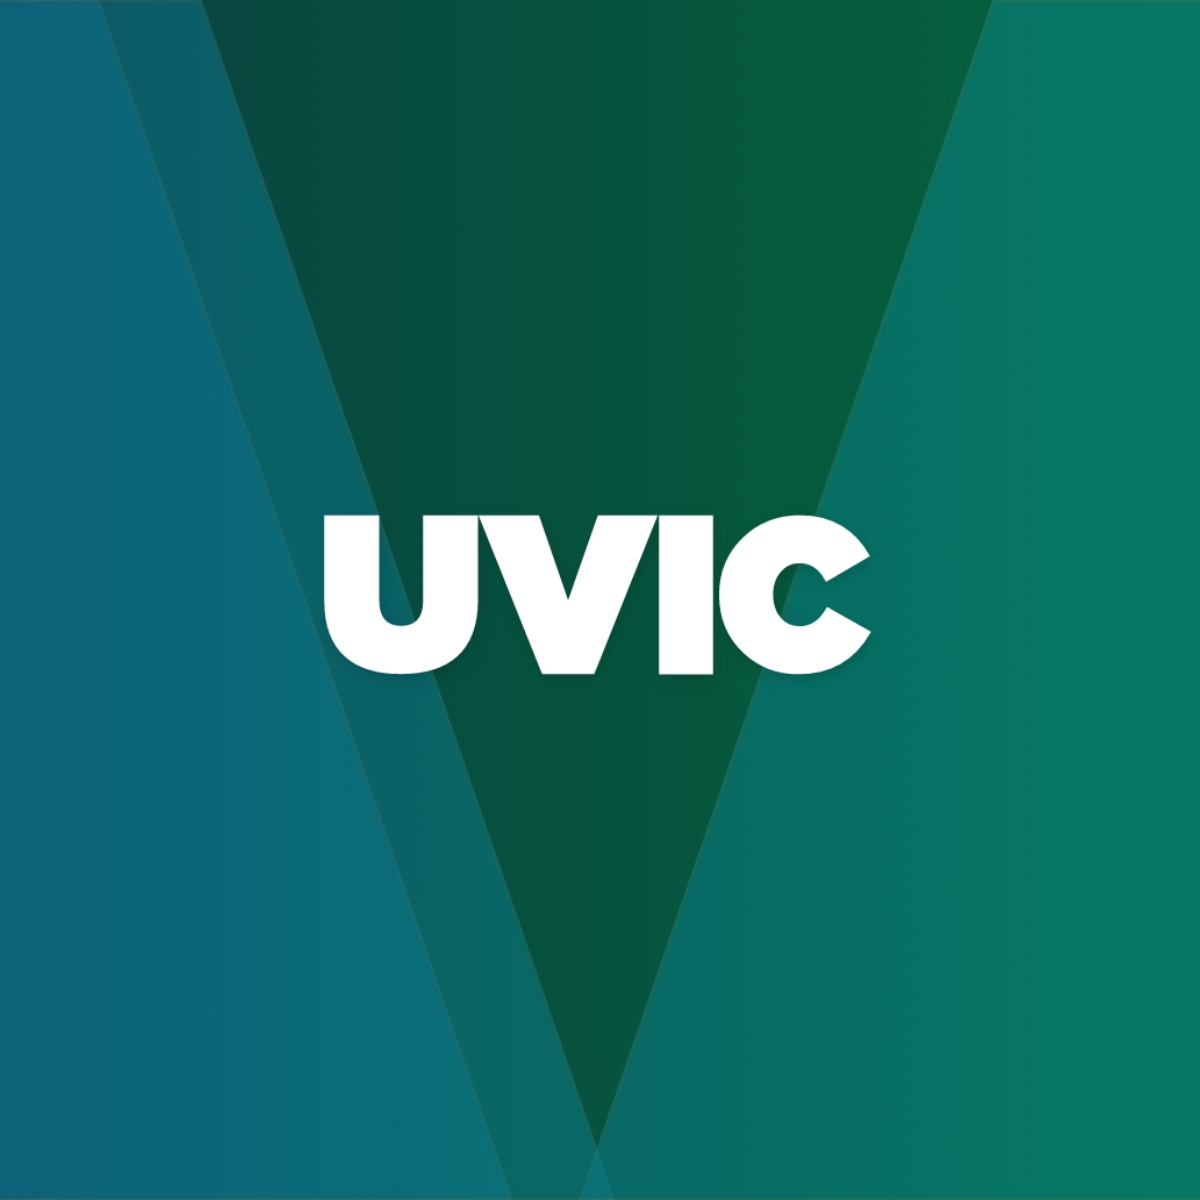 uvic feature2 - Moto Watch